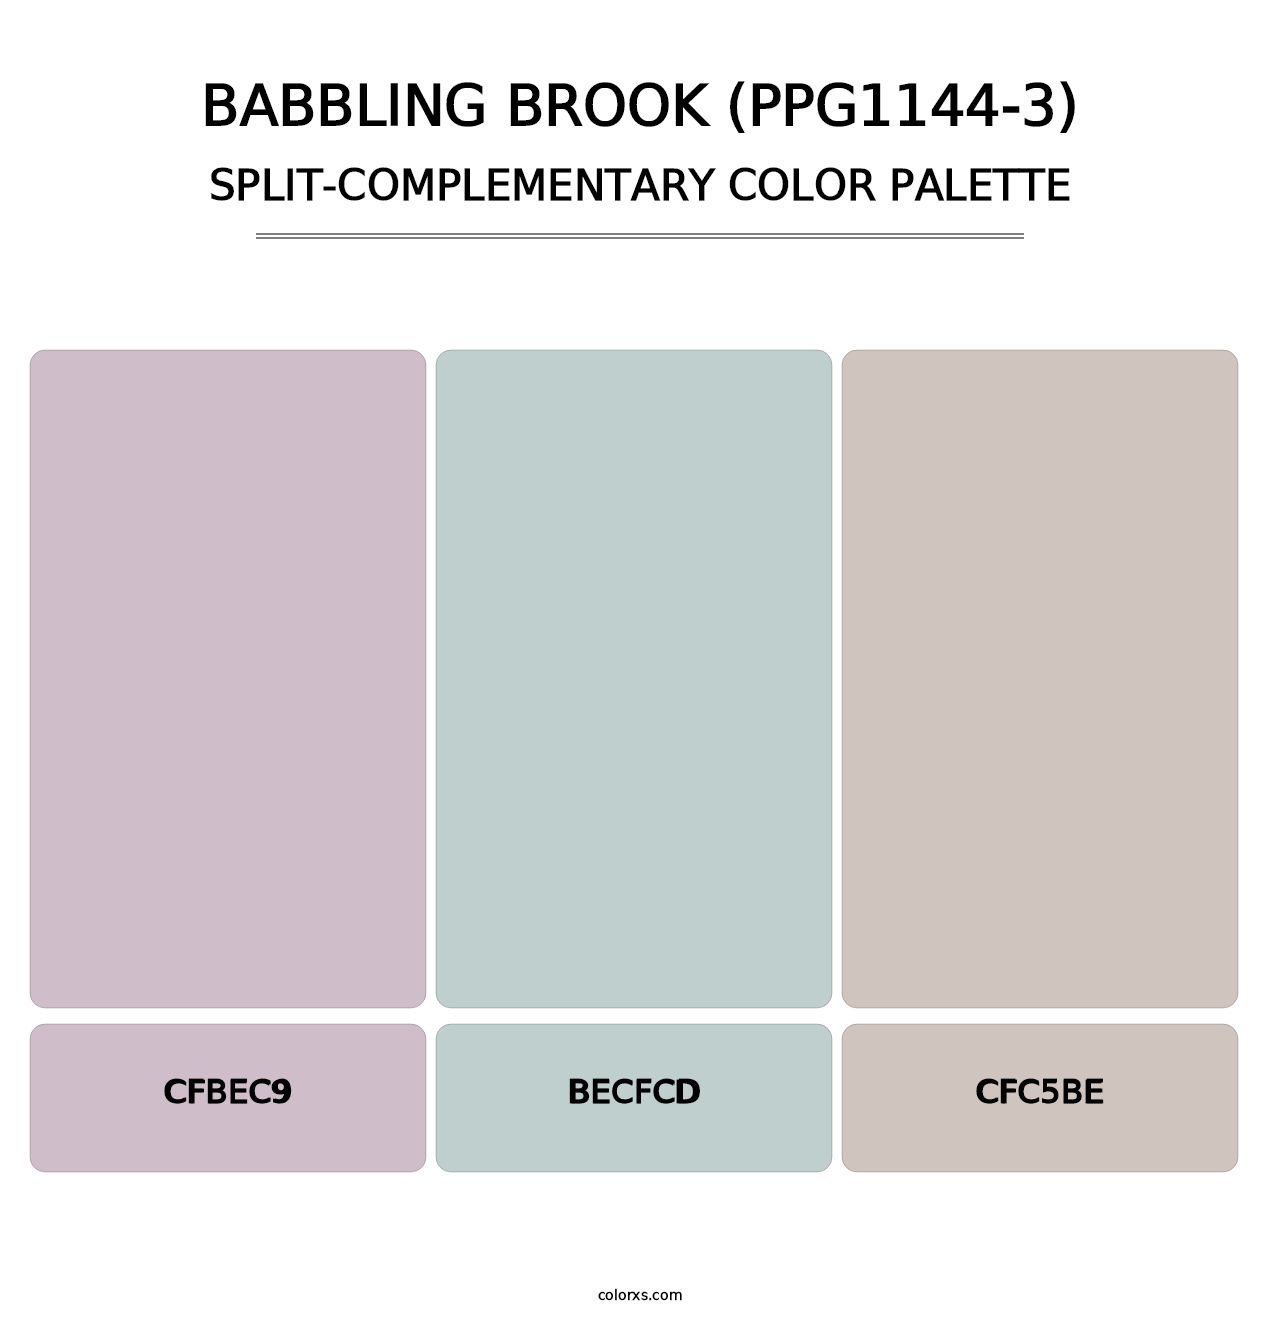 Babbling Brook (PPG1144-3) - Split-Complementary Color Palette